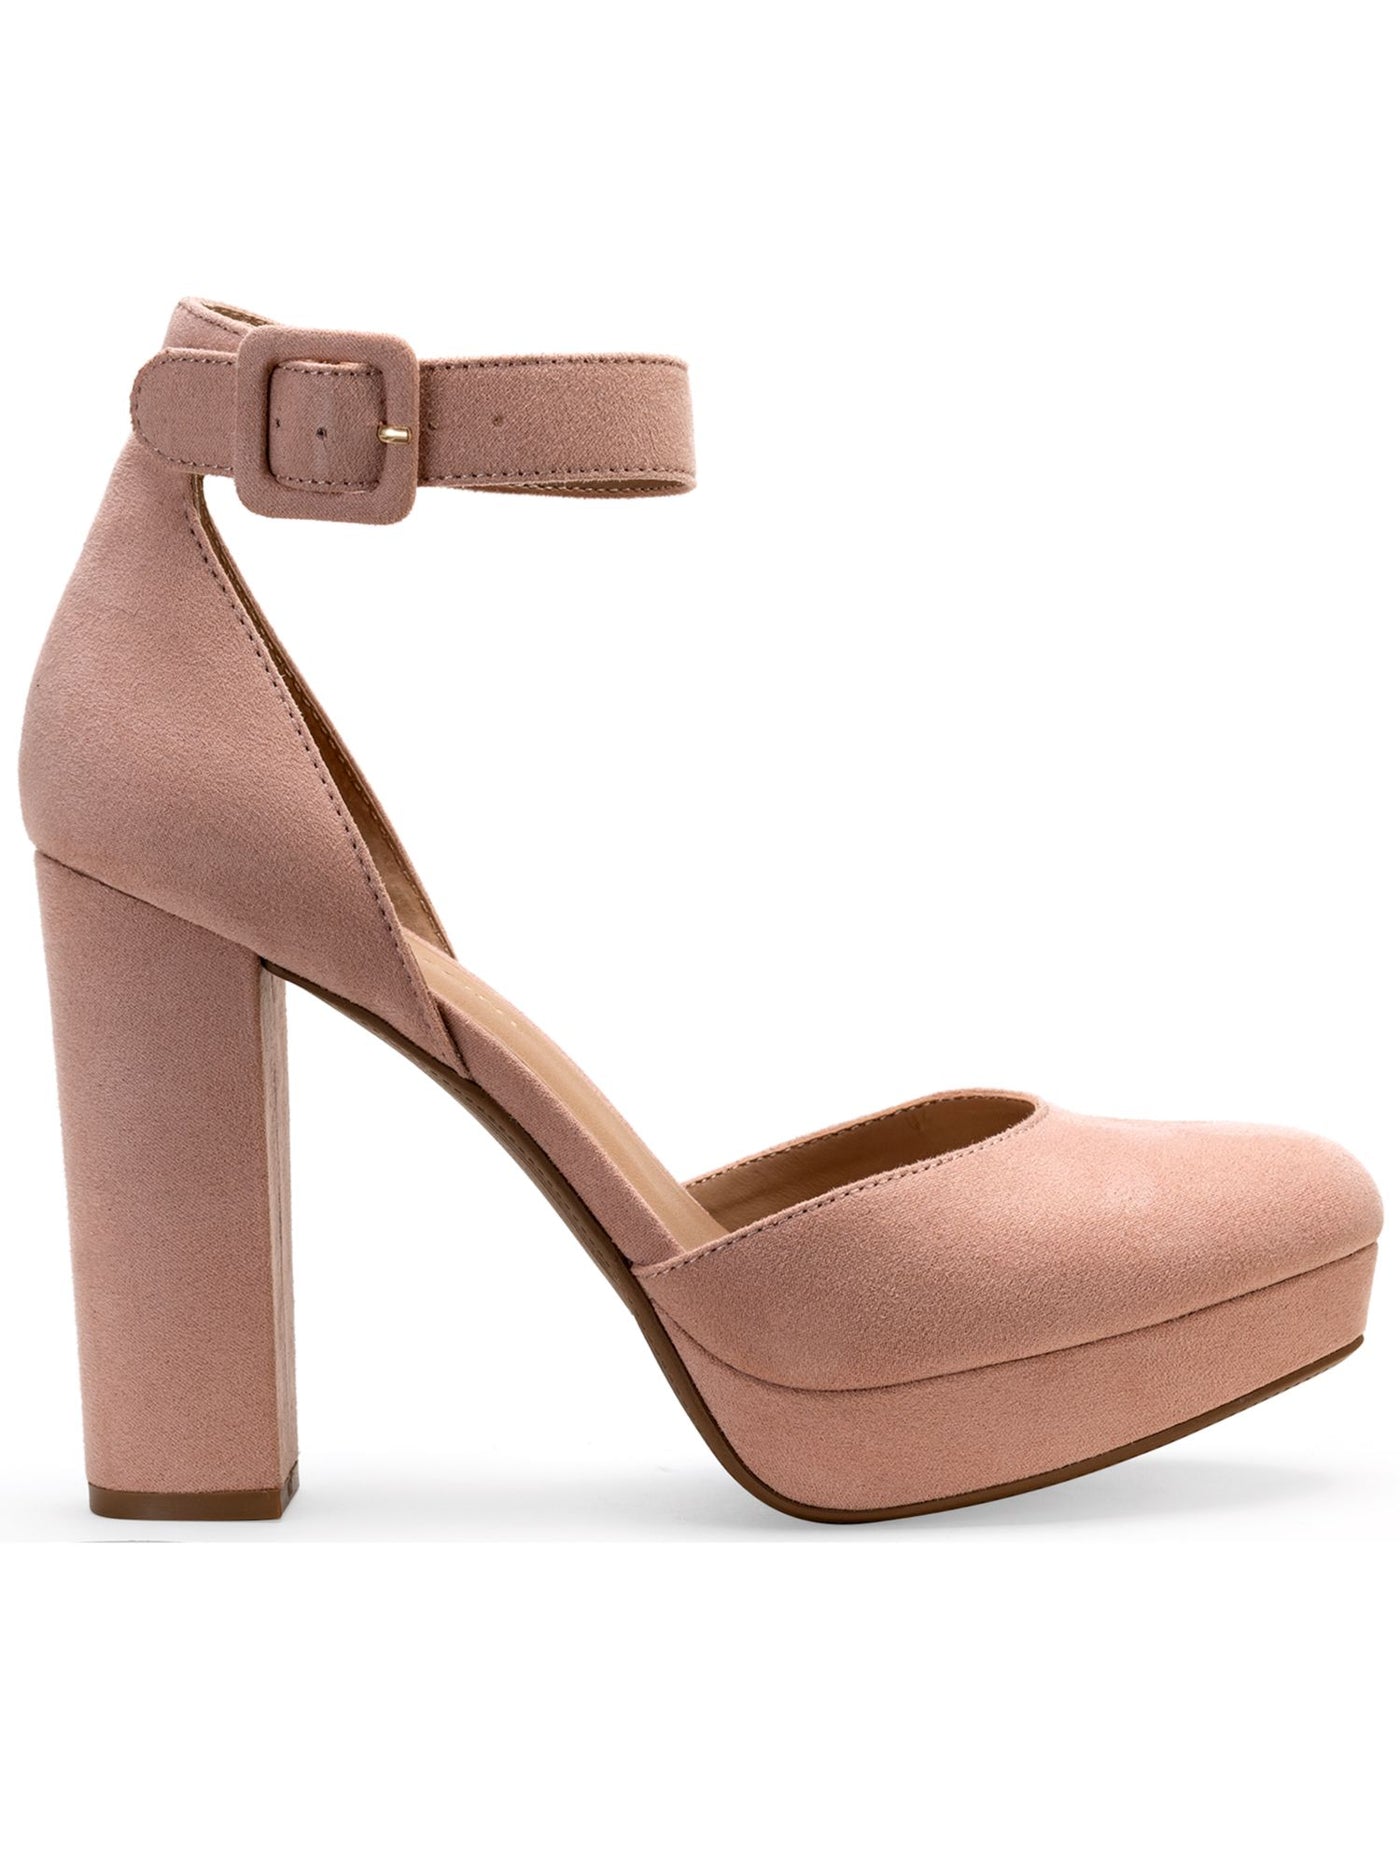 SUN STONE Womens Pink 1" Platform Padded Adjustable Ankle Strap Estrella Round Toe Block Heel Buckle Pumps Shoes 8 M